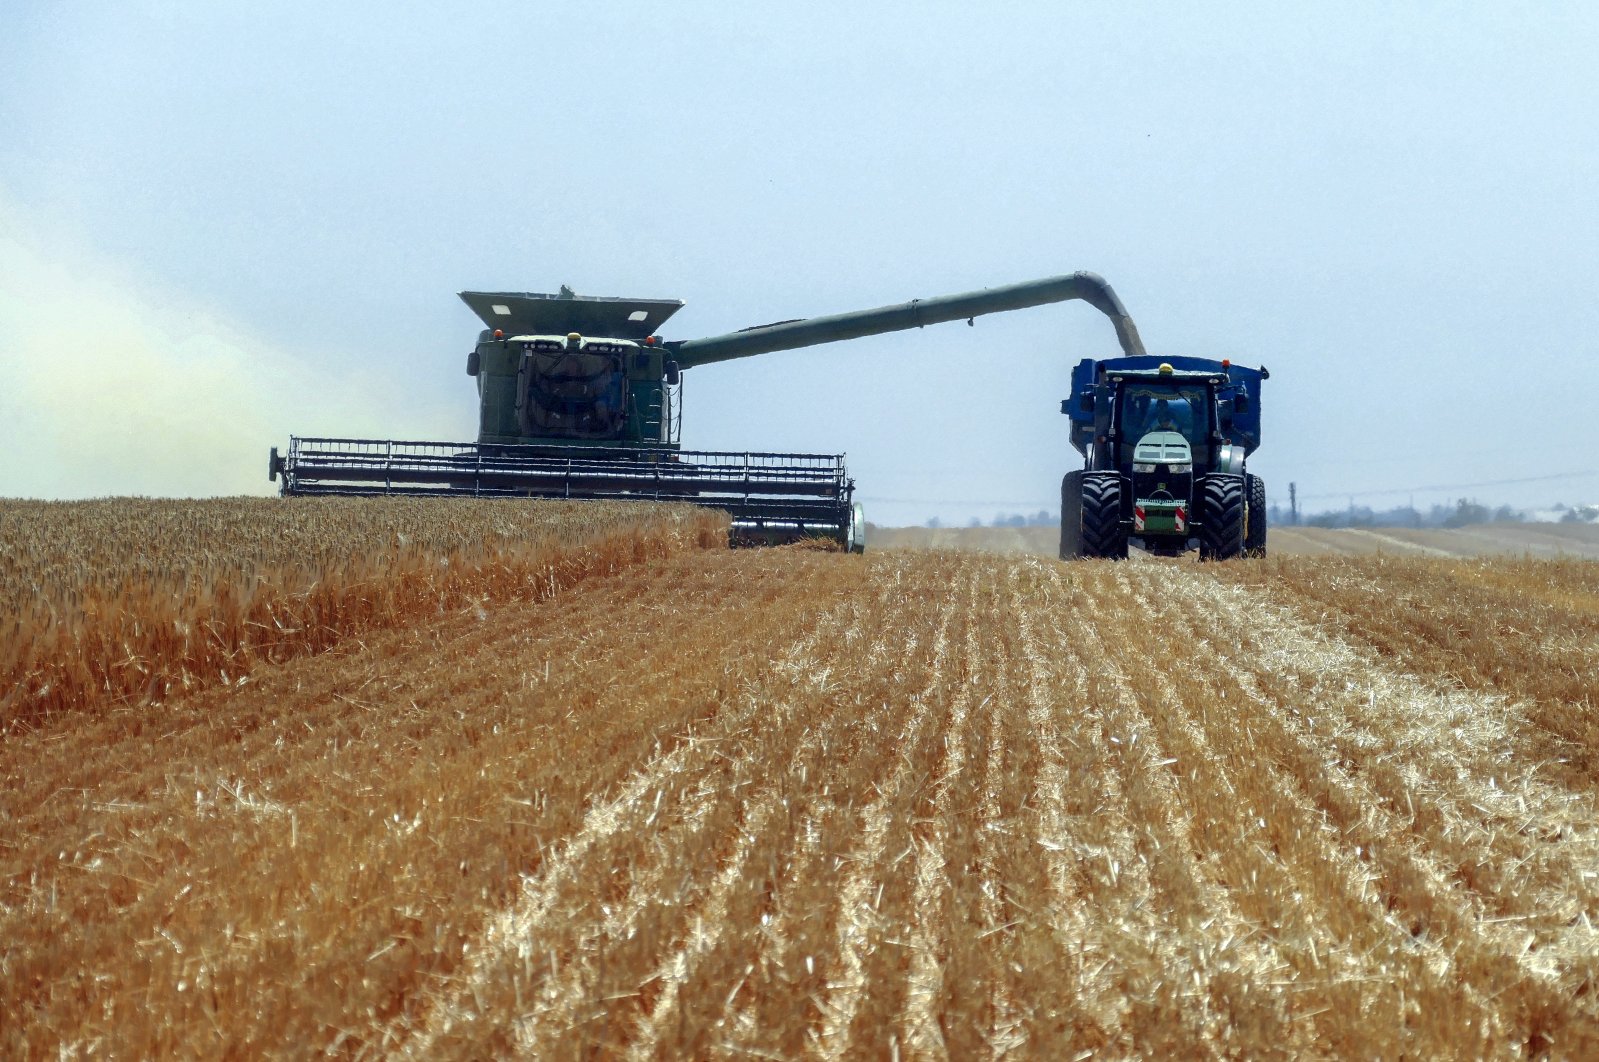 Petani Ukraina mengkhawatirkan yang terburuk setelah kesepakatan biji-bijian gagal